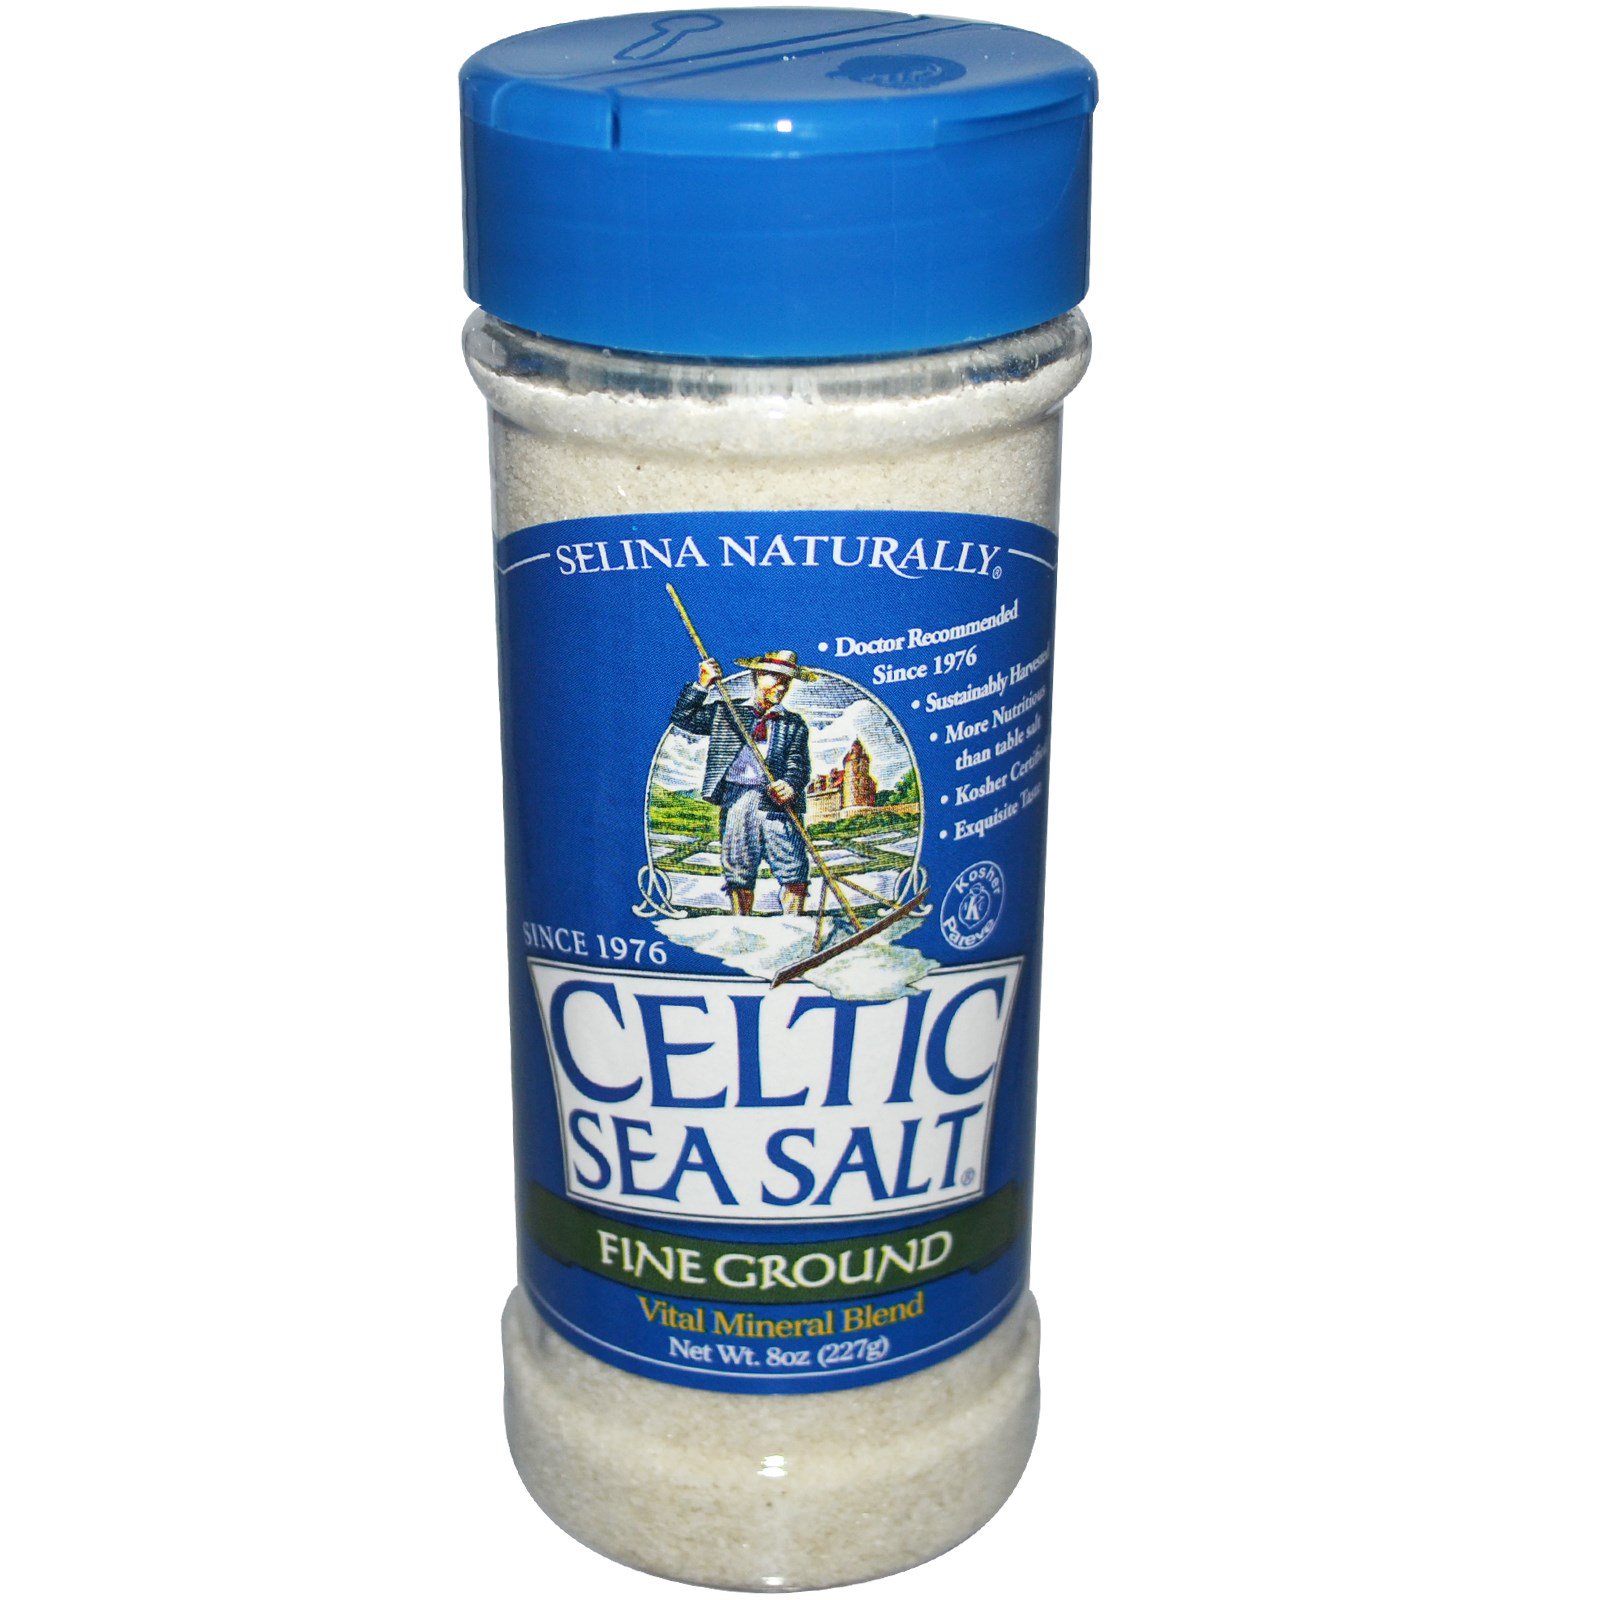 Celtic Sea Salt, Fine Ground, Vital Mineral Blend Shaker ...